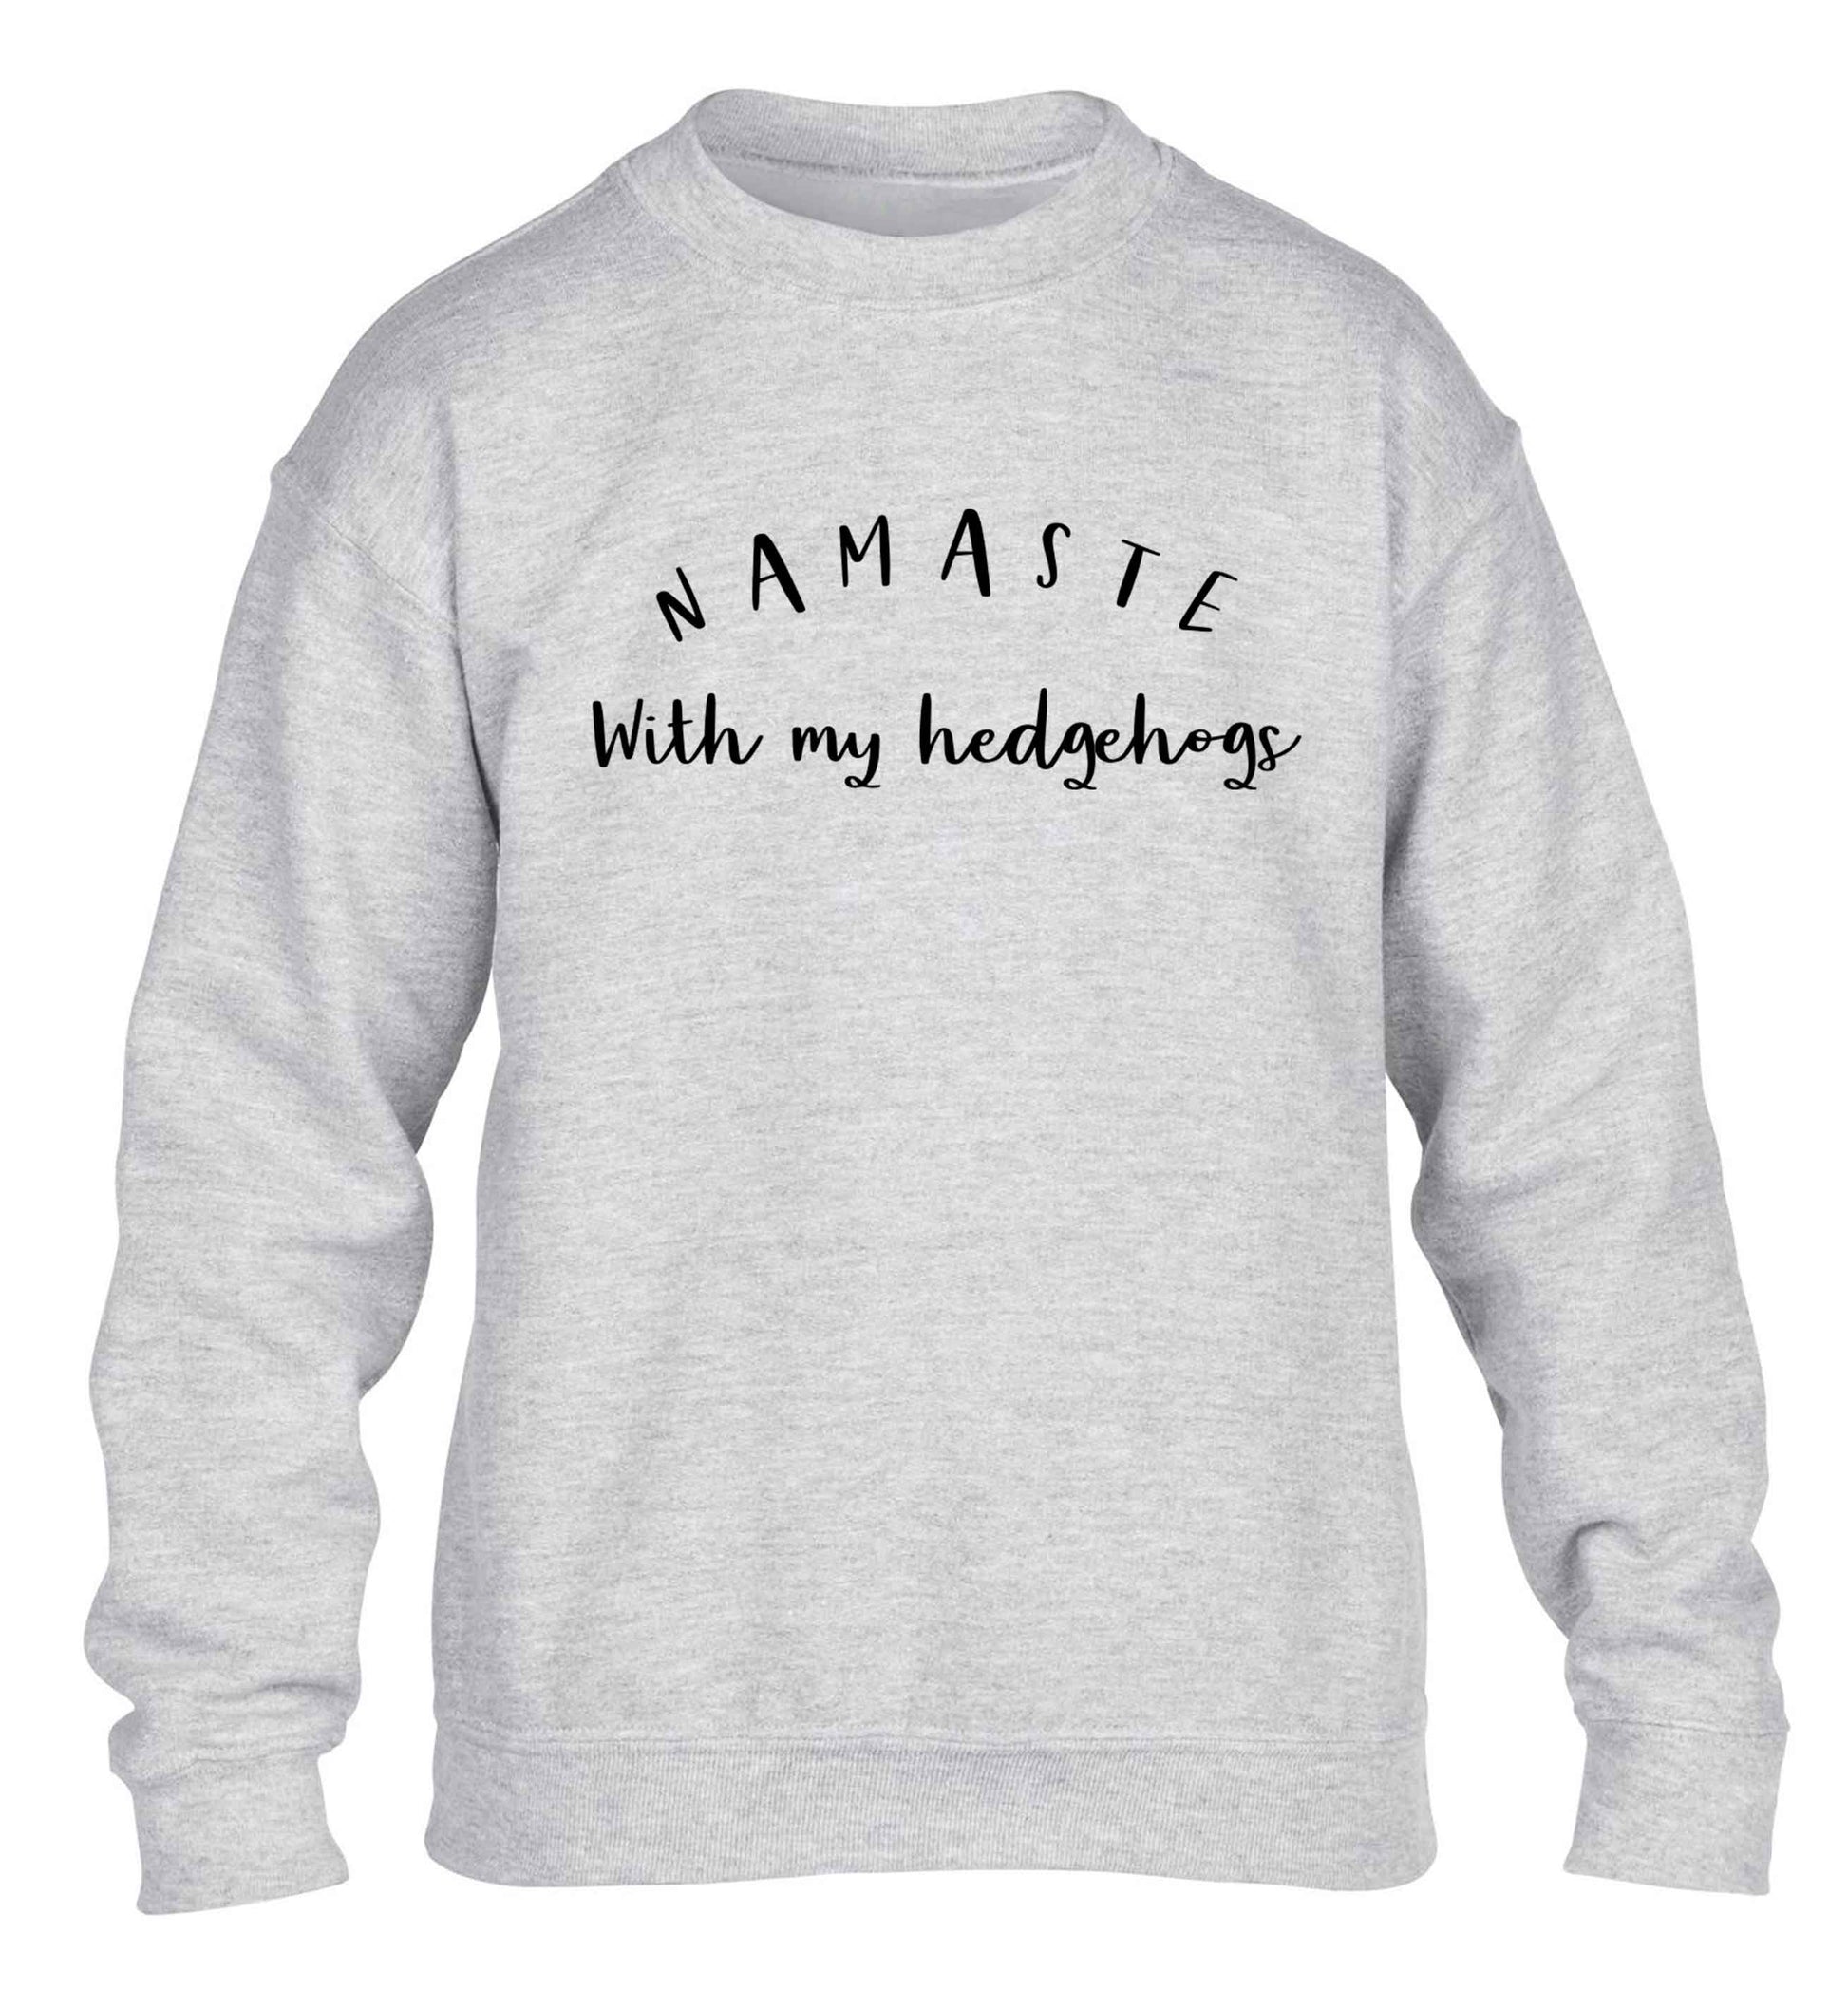 Namaste with my hedgehog children's grey sweater 12-13 Years